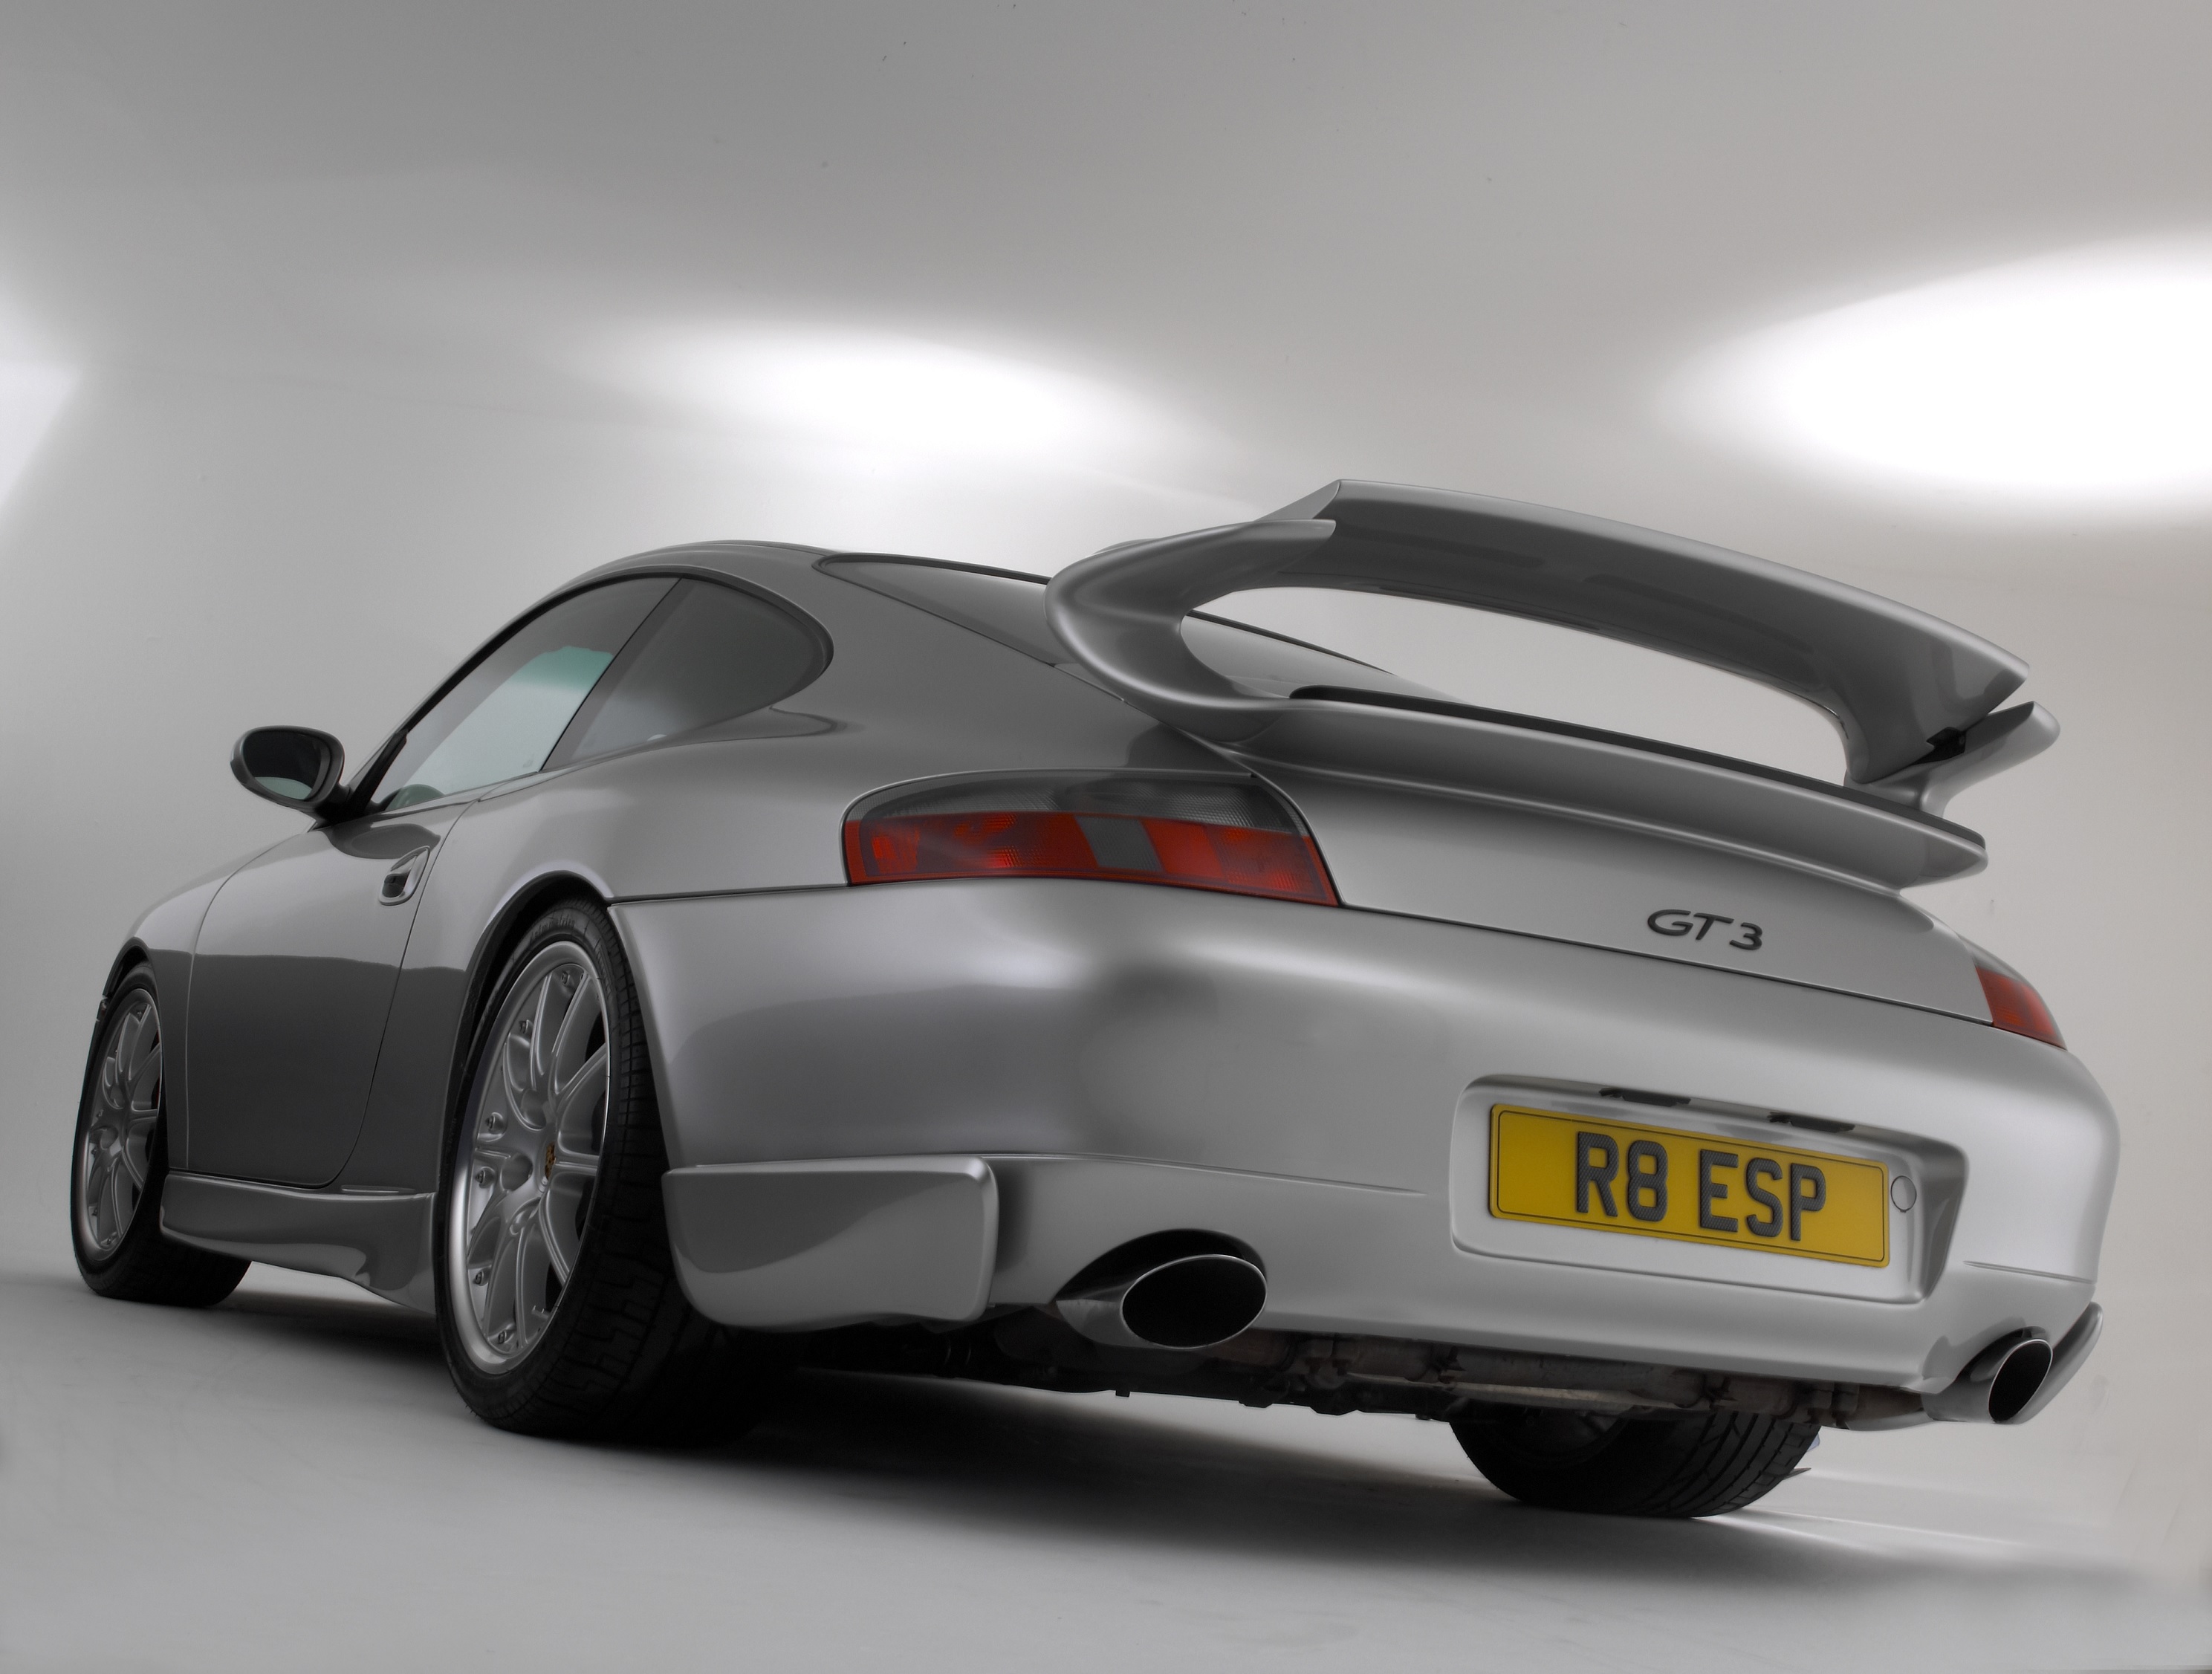 The rear 3/4 view of a silver 2000 996.1 Porsche 911 GT3 in a white studio